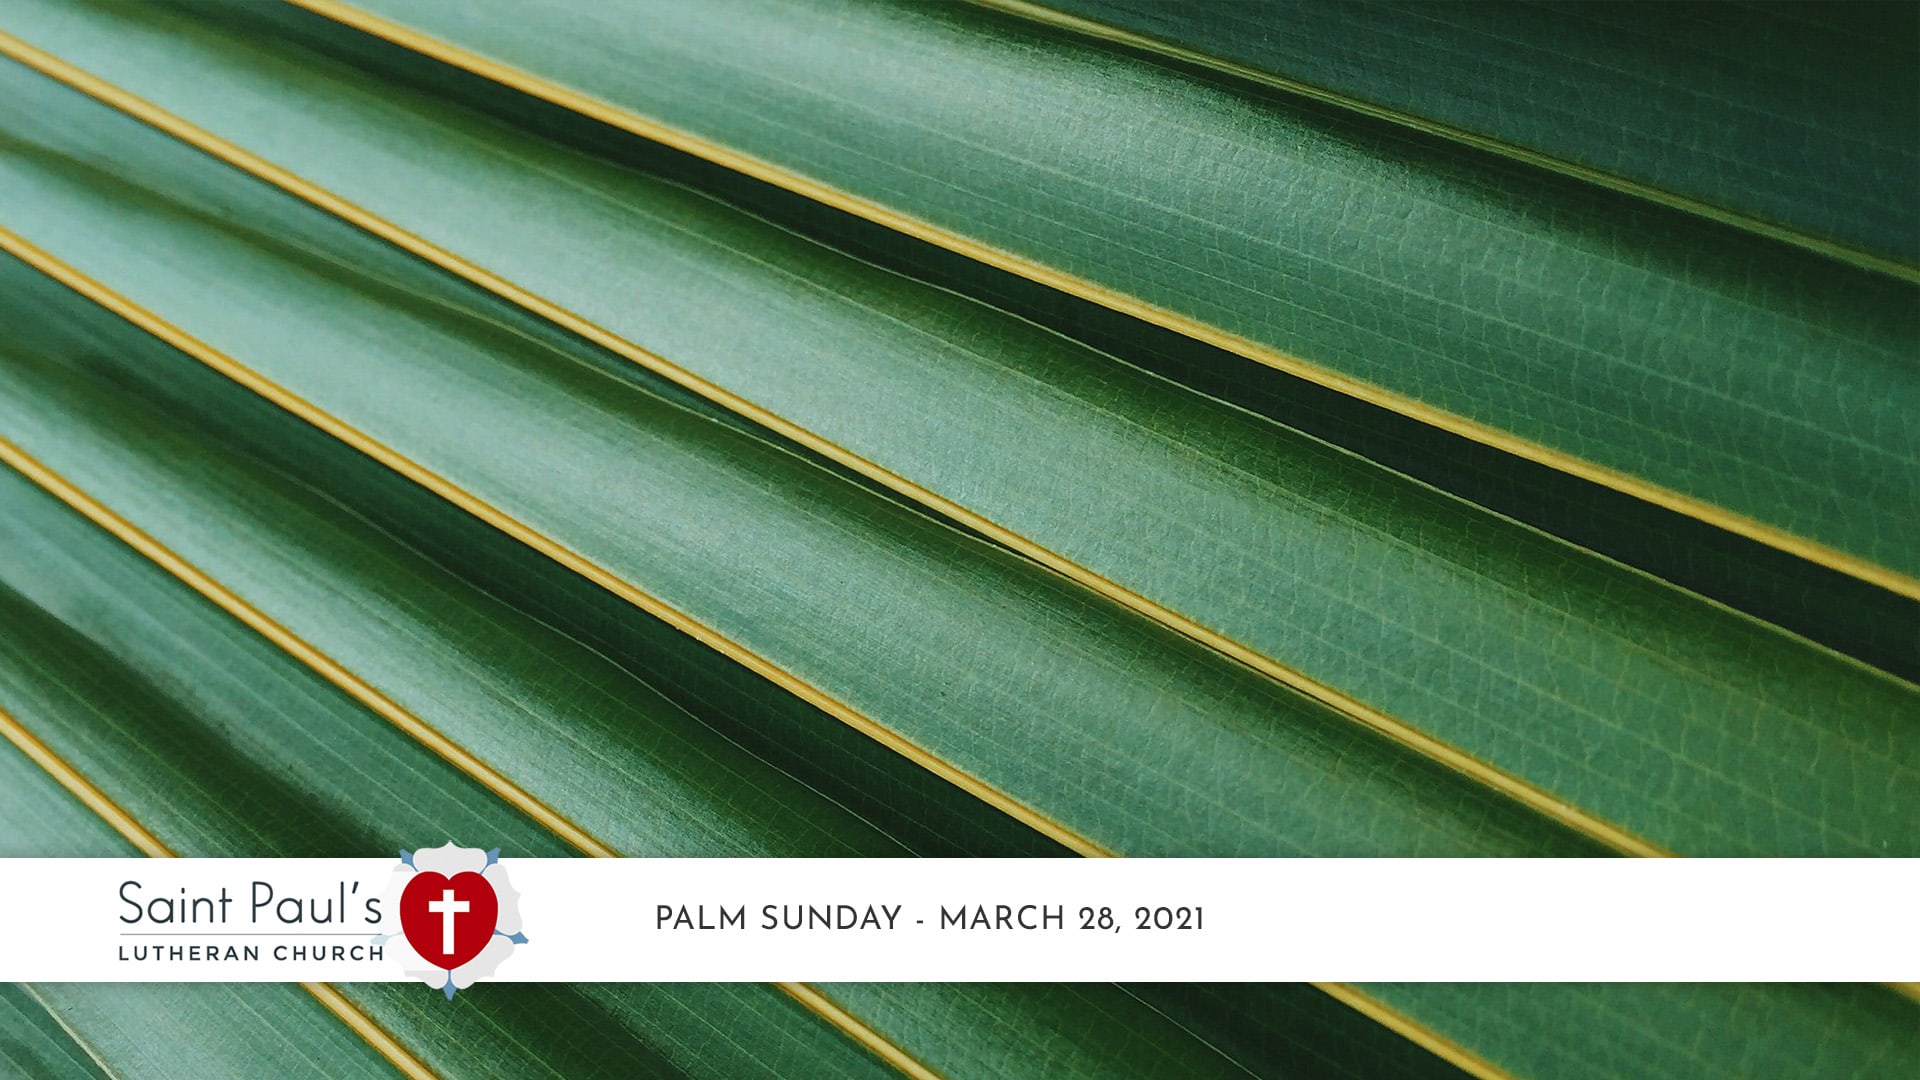 Palm Sunday – March 28, 2021